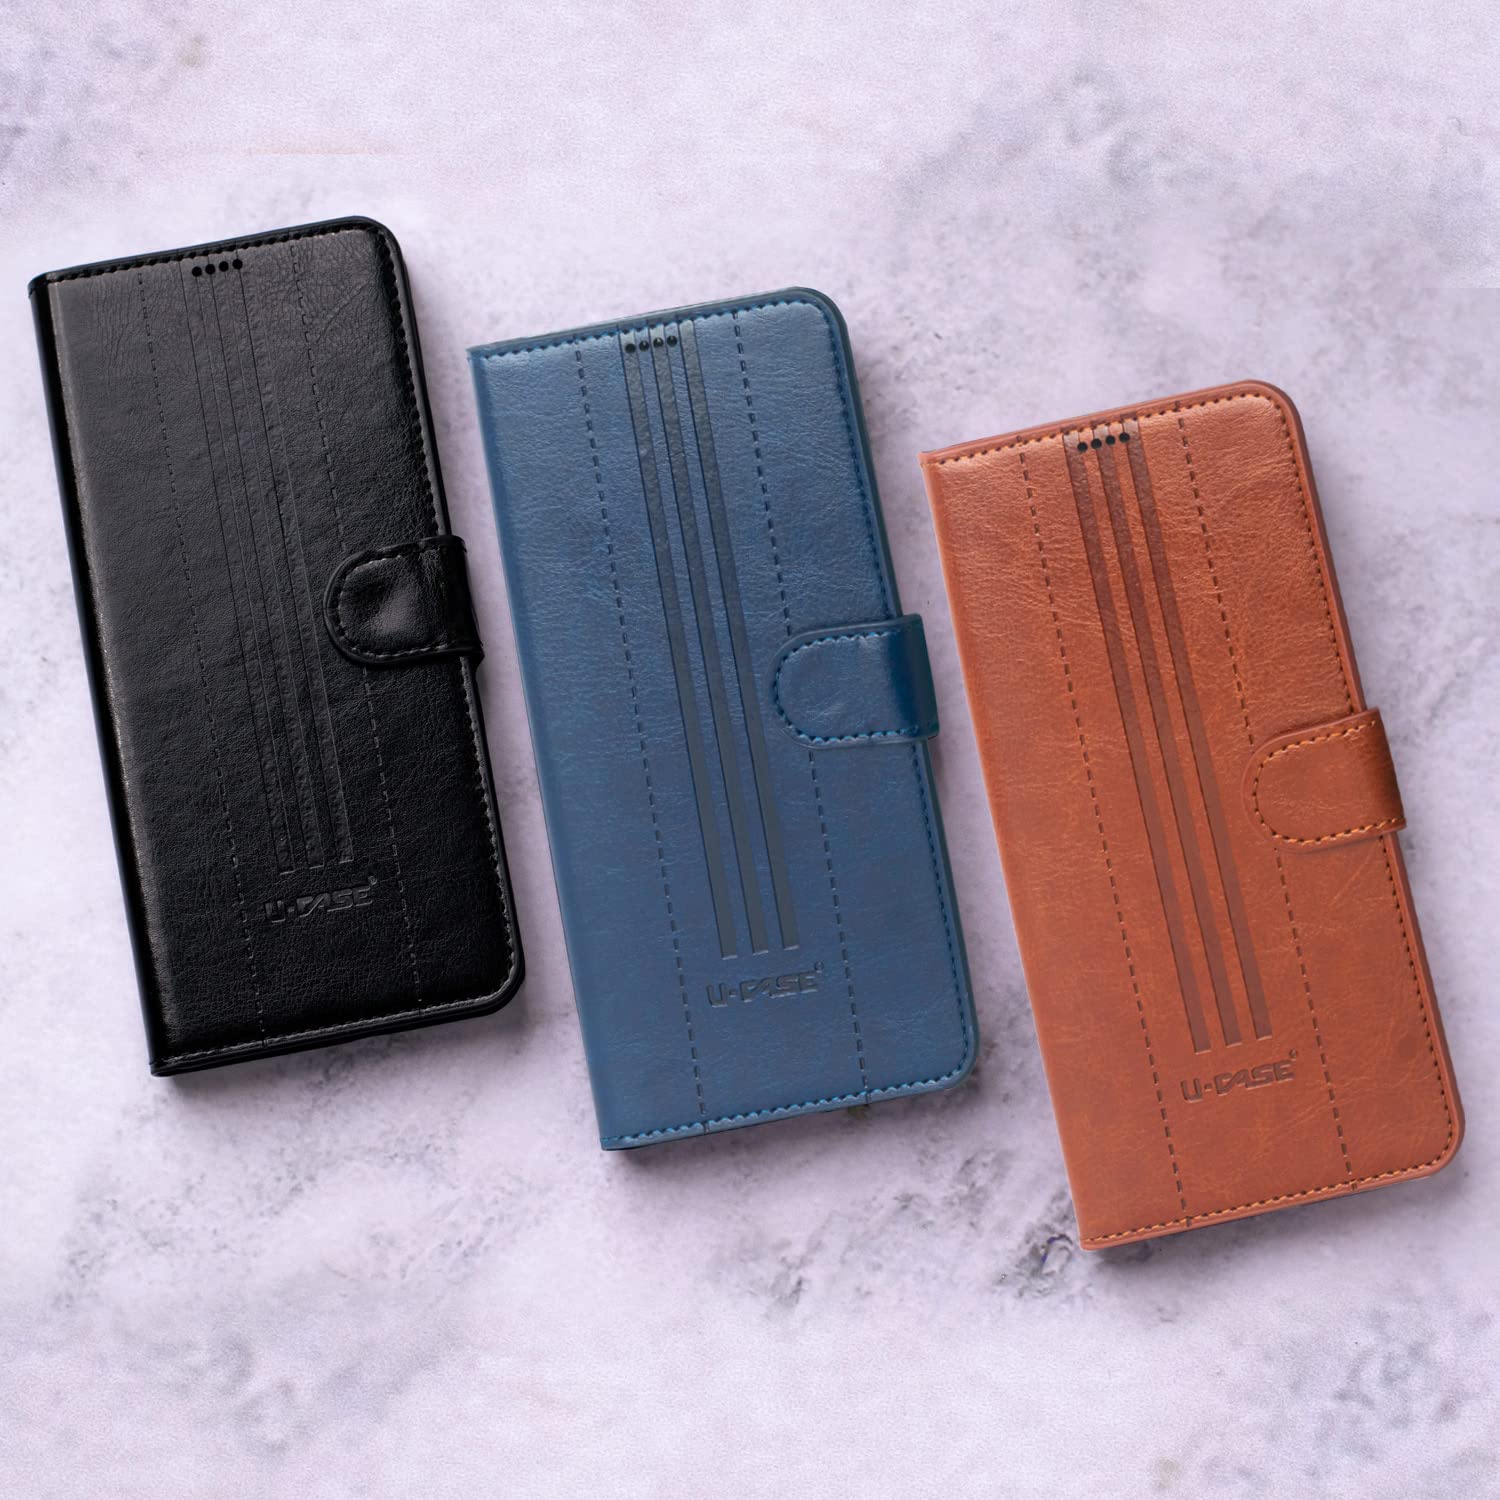 U-CASE Flip Cover for Vivo S1 Pro Vegan Foldable Stand & Pocket Magnetic Closure colors